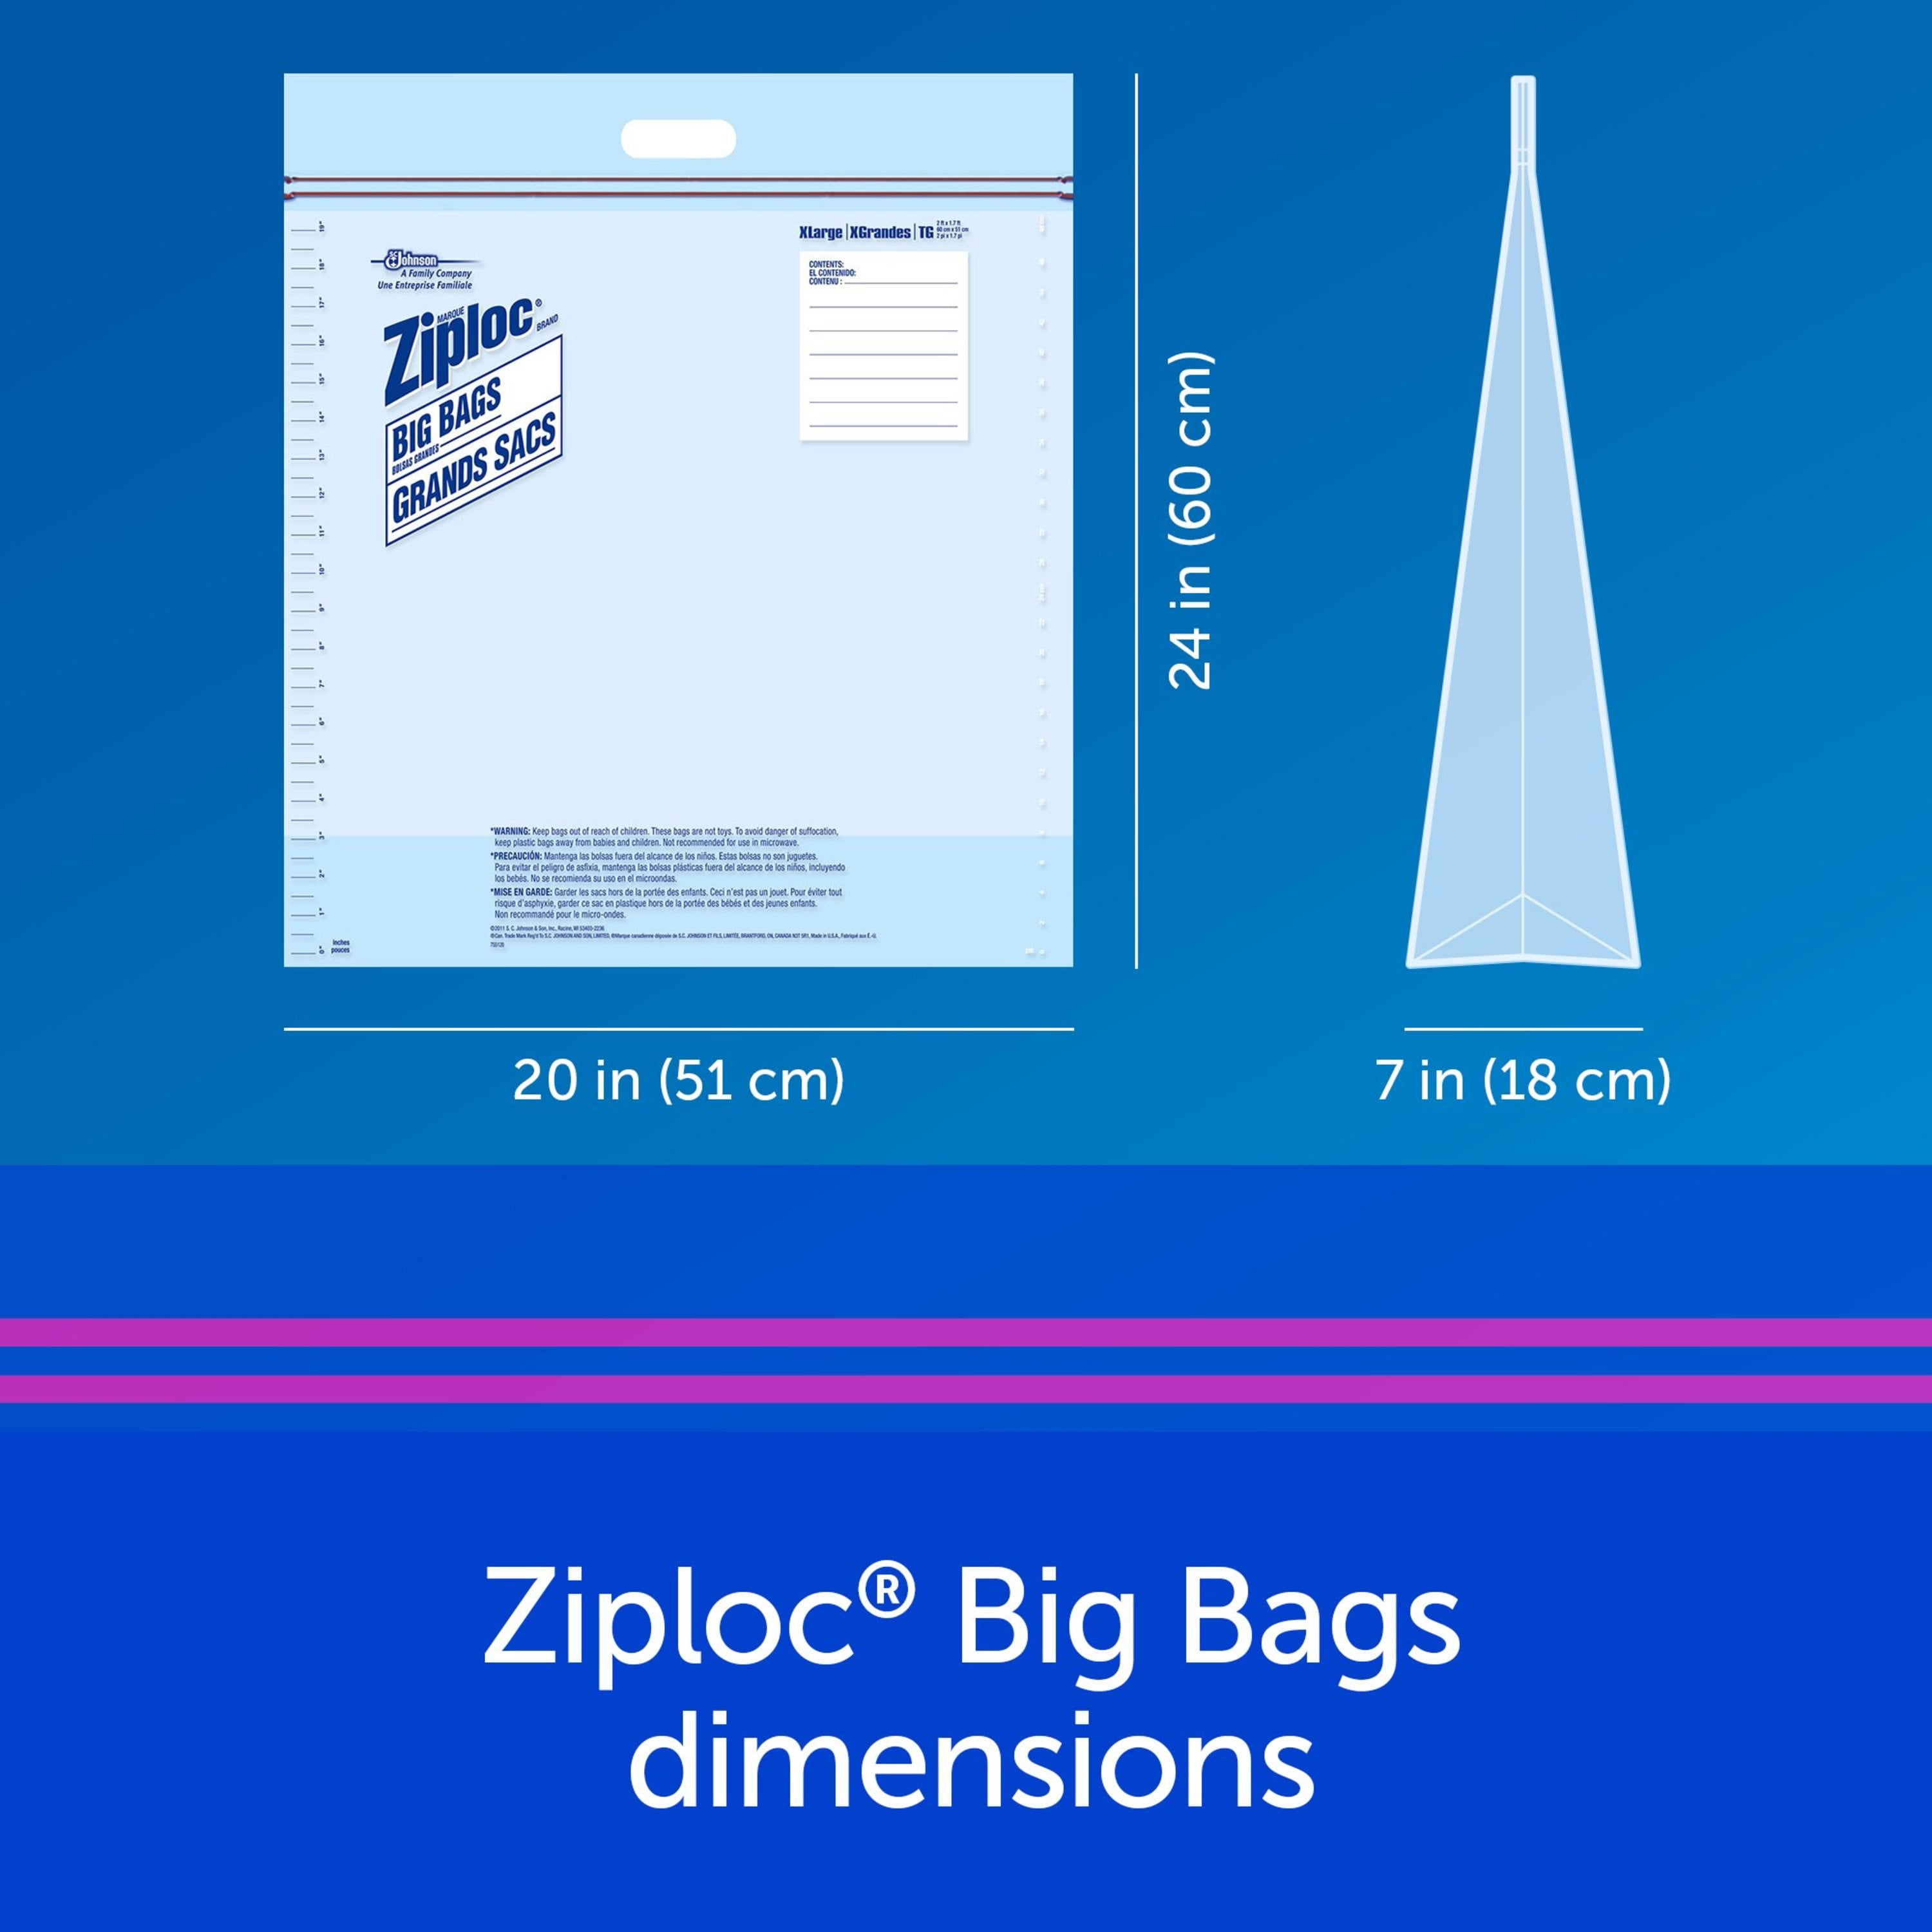 7 Count Ziploc Big Bag 20 Gallon XXL Storage Bags HUGE 2 FEET x